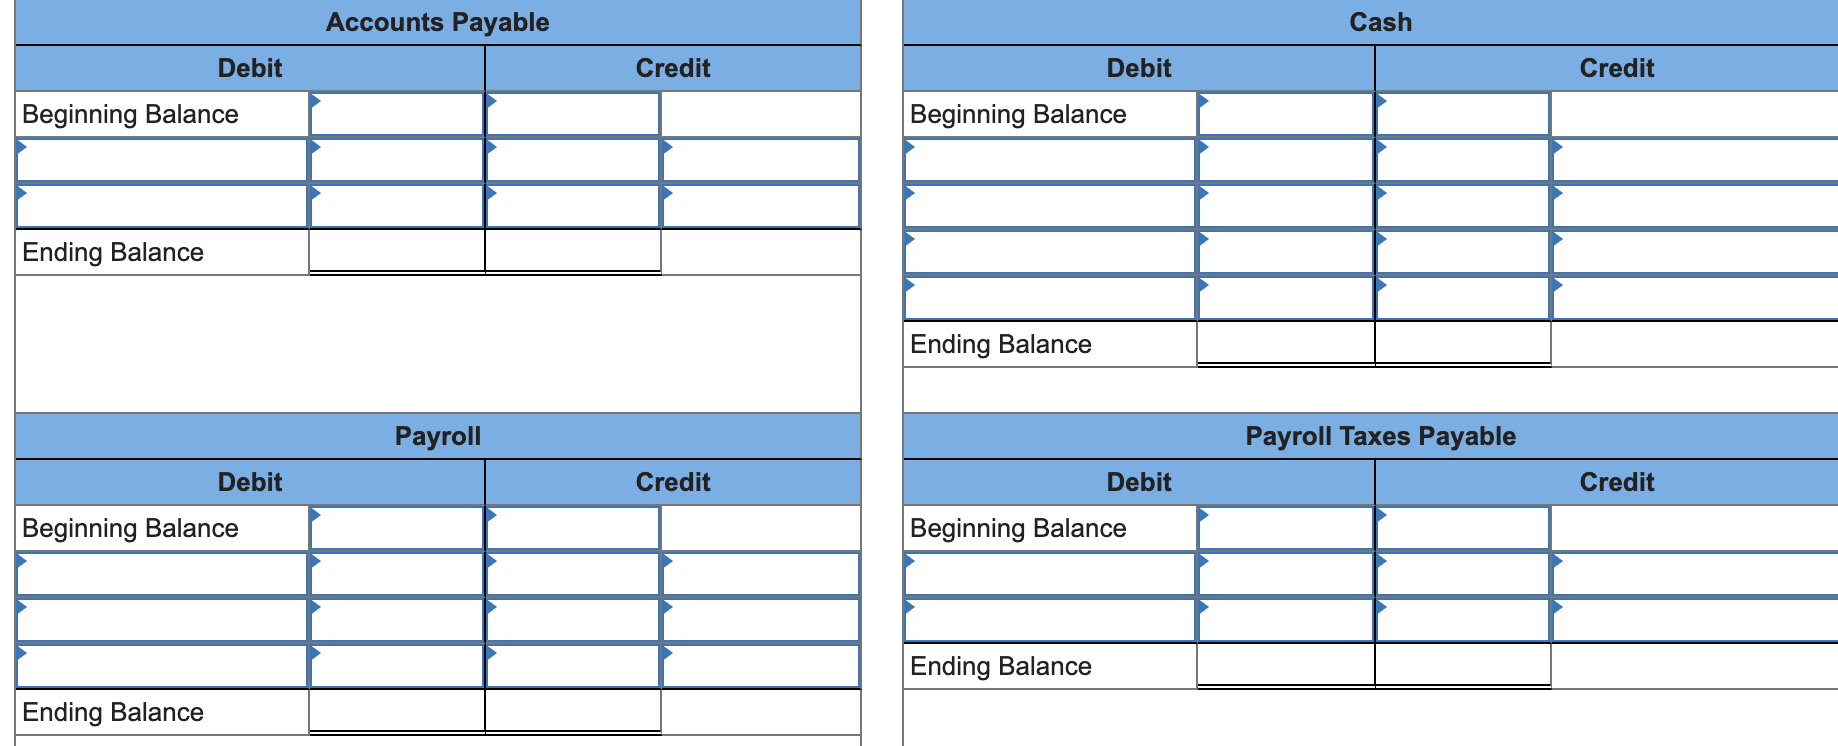 Beginning Balance Ending Balance Debit Ending Balance Debit Beginning Balance Accounts Payable Payroll Credit